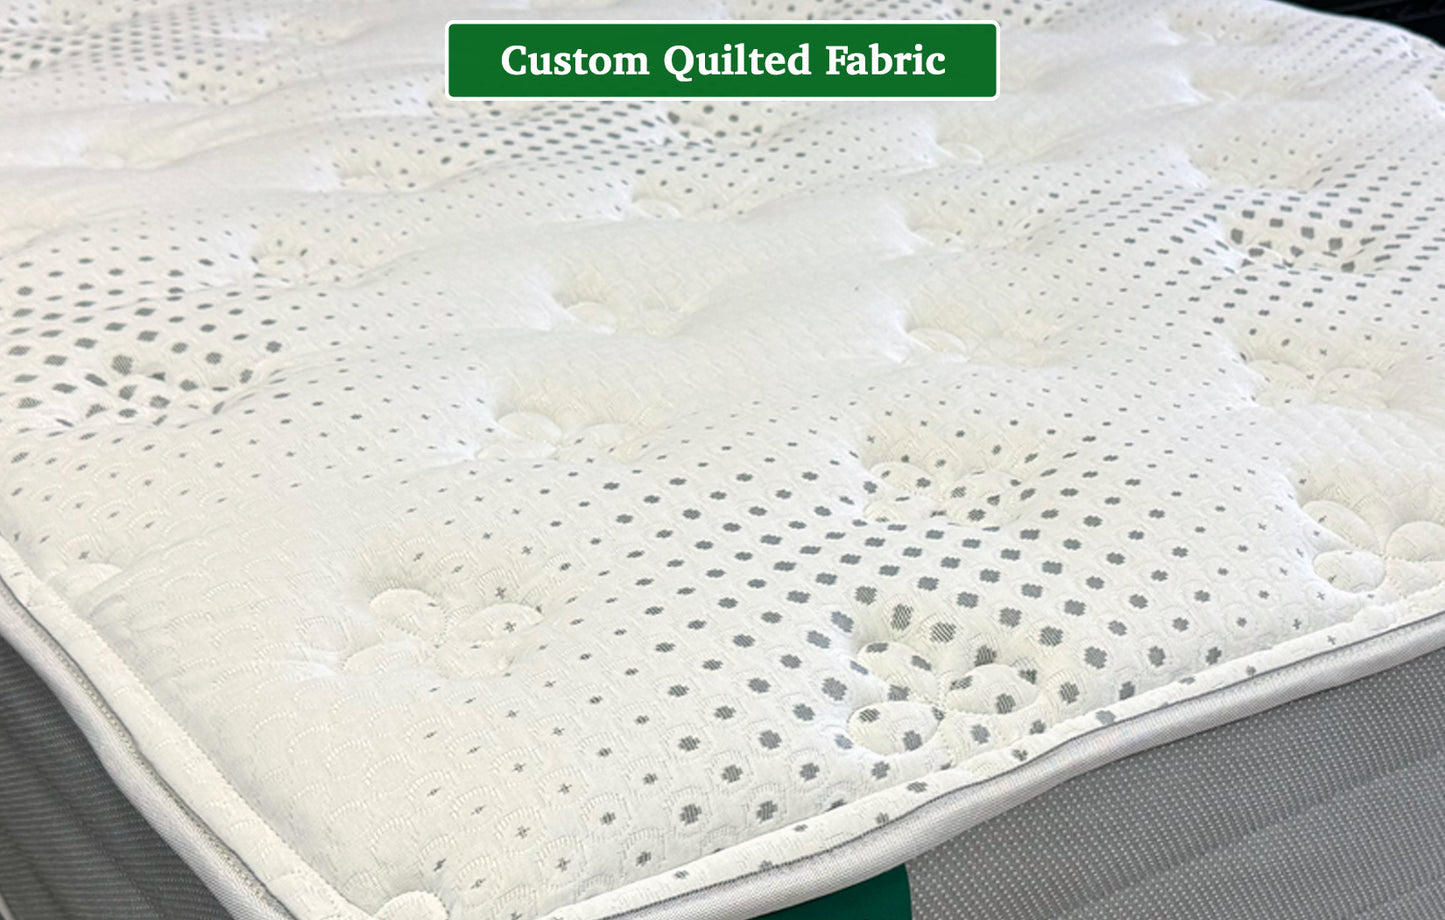 Clearwater Medium, custom mattress